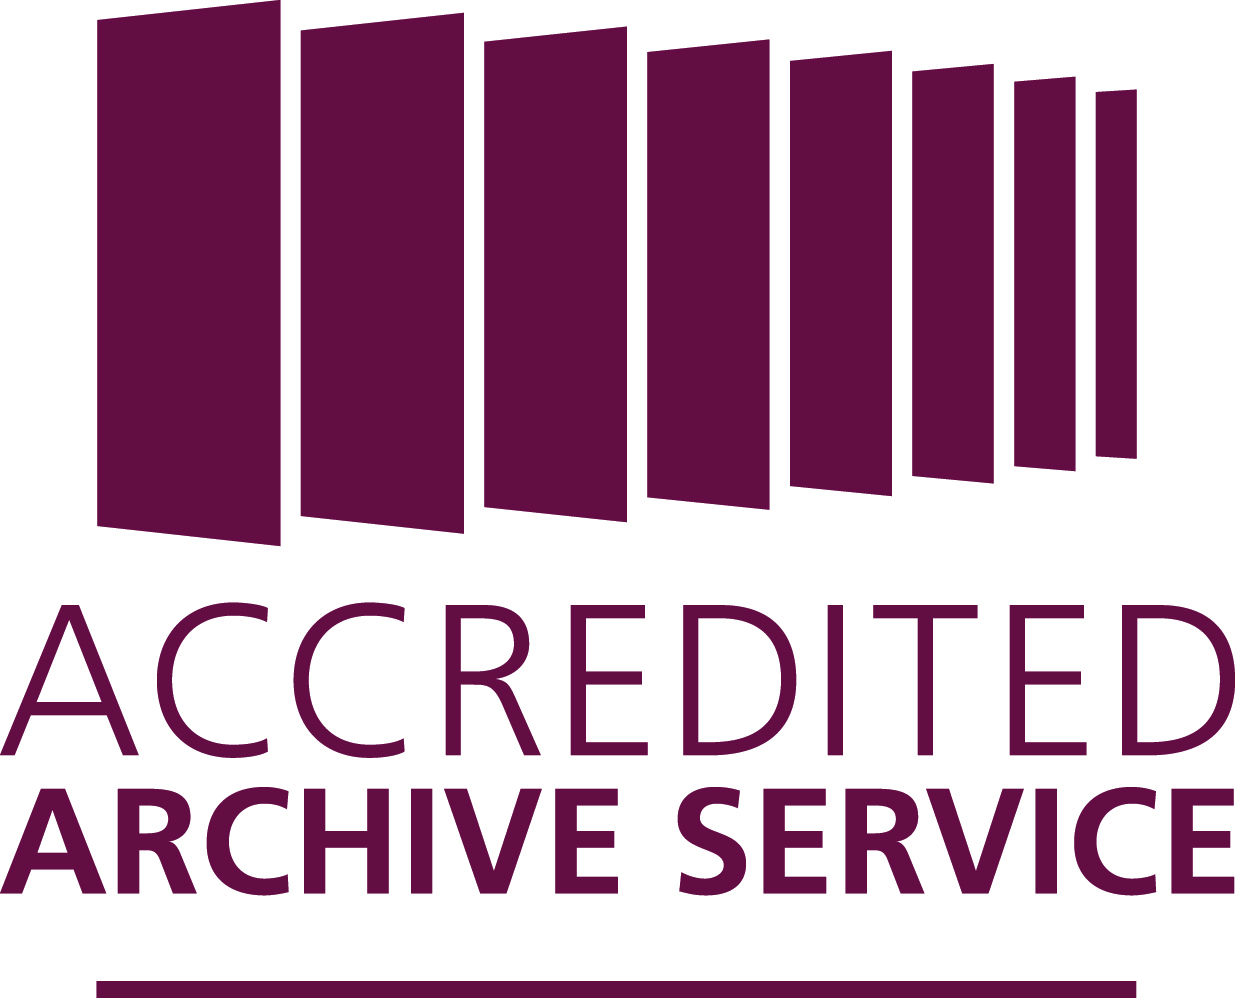 Archive Service Accreditation logo